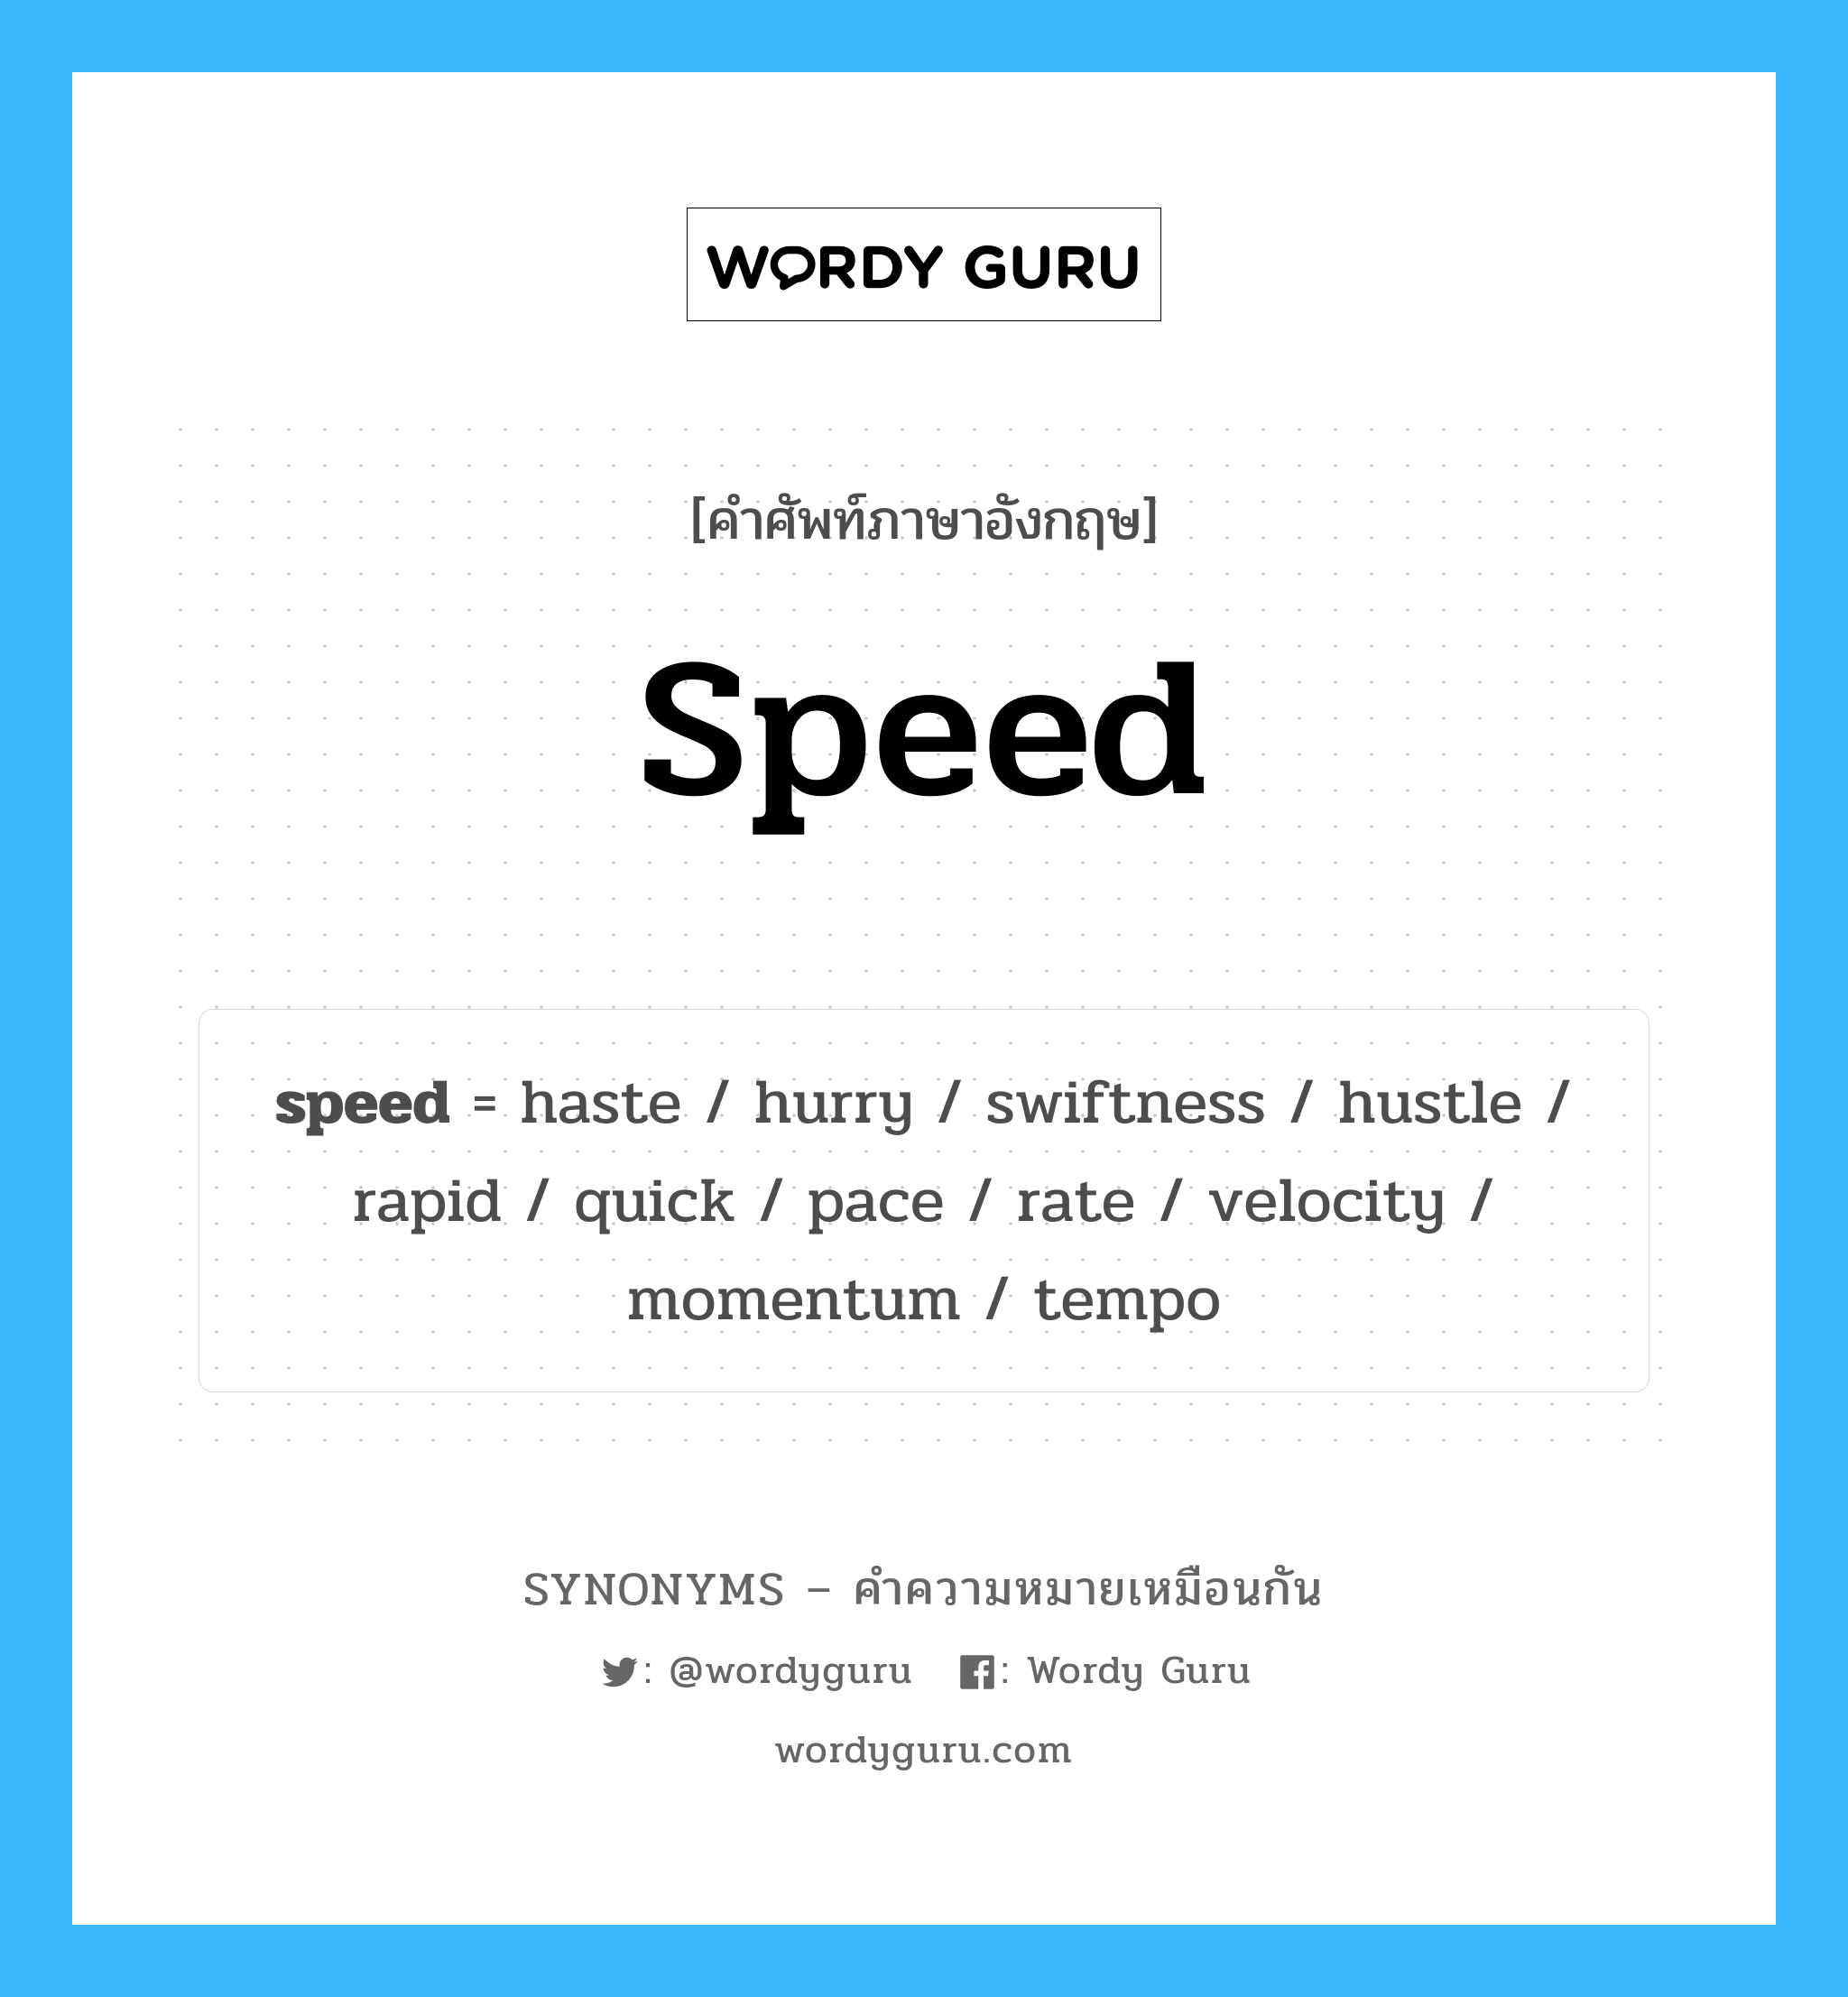 velocity เป็นหนึ่งใน speed และมีคำอื่น ๆ อีกดังนี้, คำศัพท์ภาษาอังกฤษ velocity ความหมายคล้ายกันกับ speed แปลว่า ความเร็ว หมวด speed